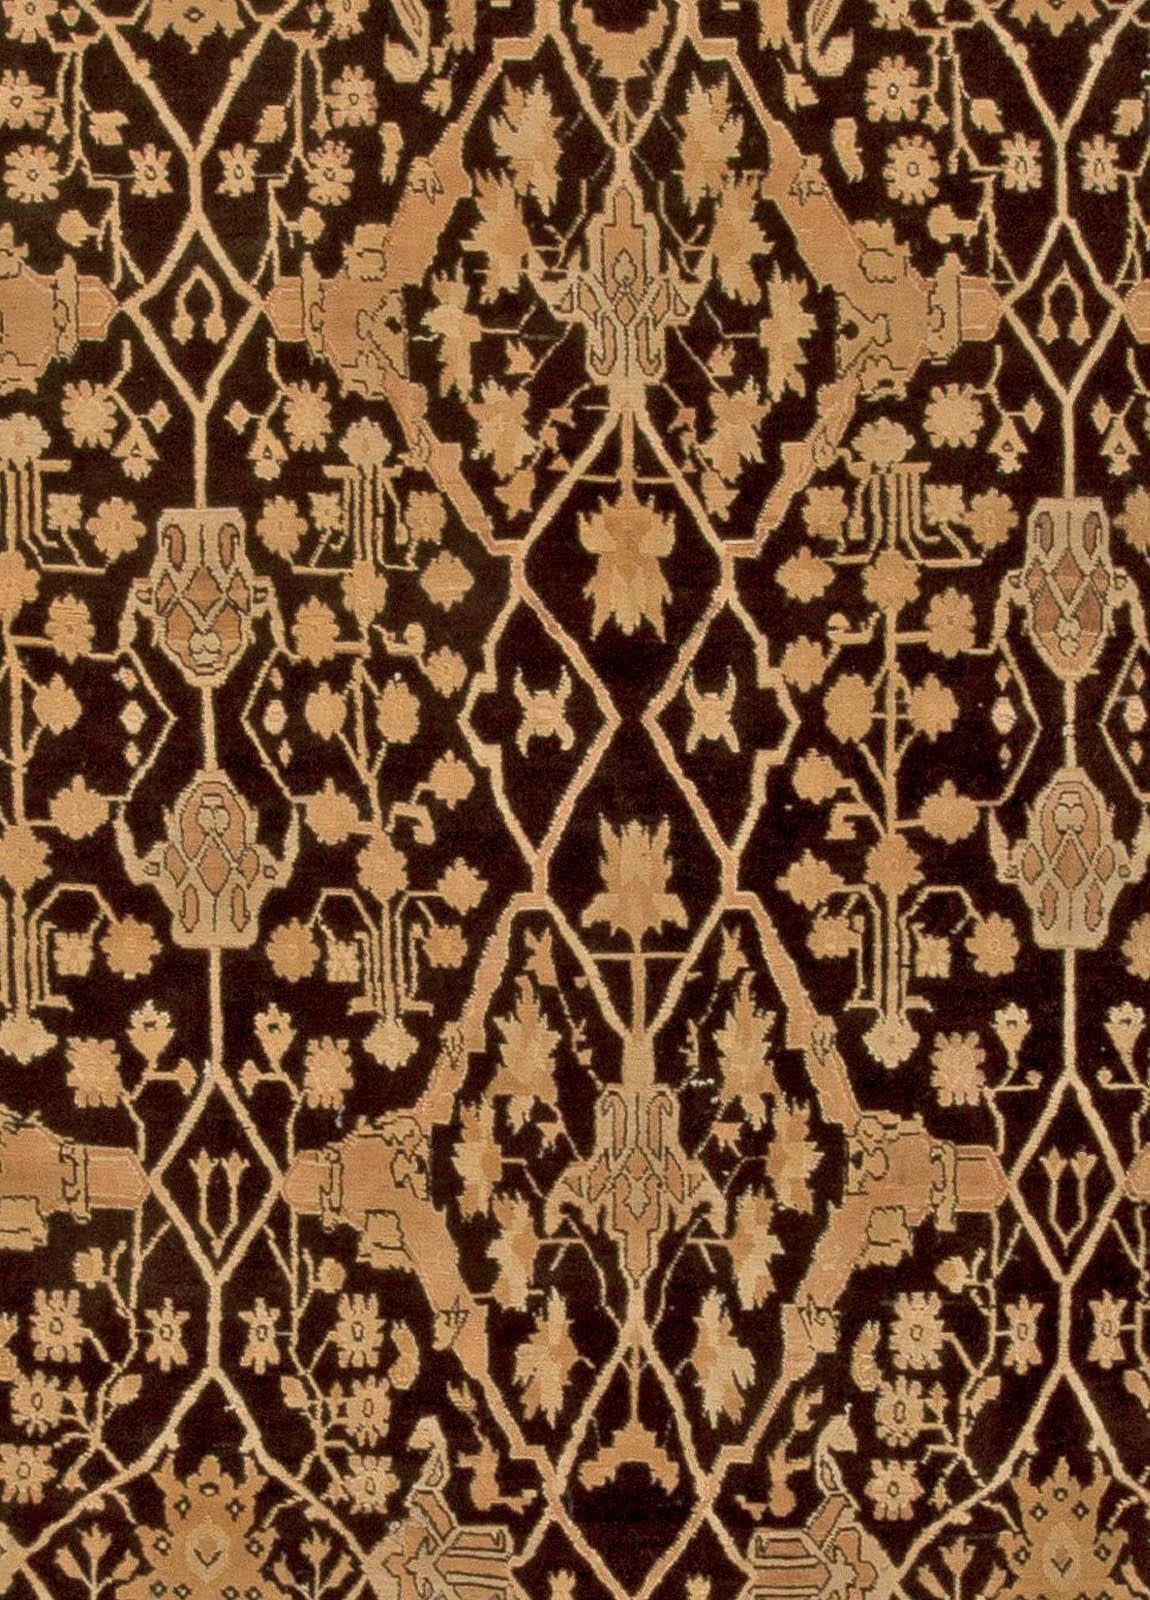 Large antique Indian Agra rug
Size: 14'0